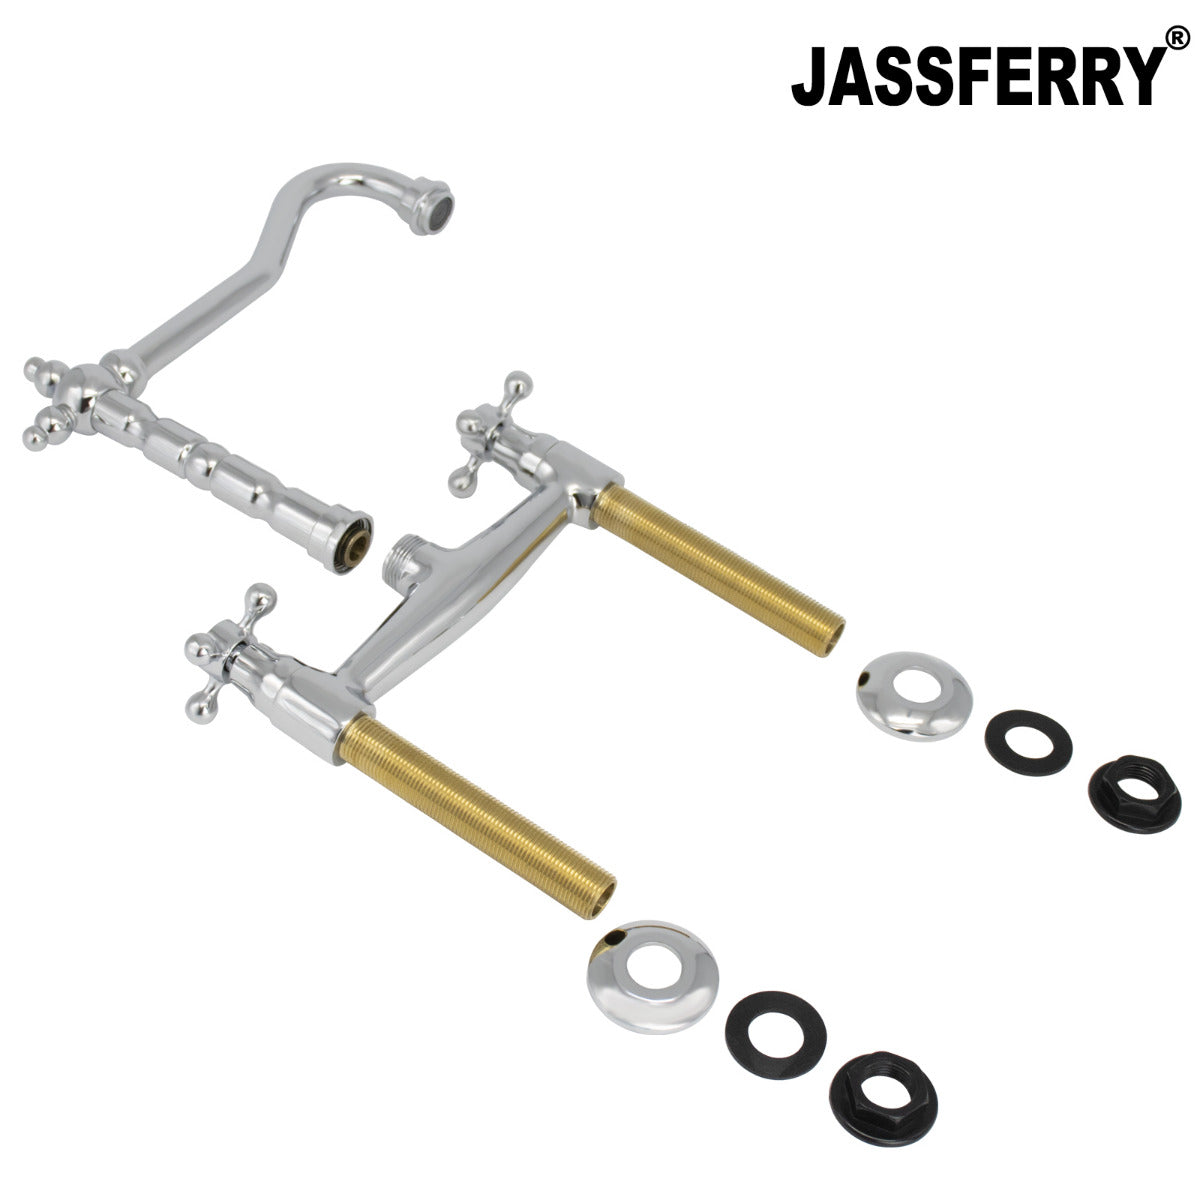 JassferryJASSFERRY 2 Hole Kitchen Mixer tap Chrome with Swivel Spout Cross HandleKitchen taps